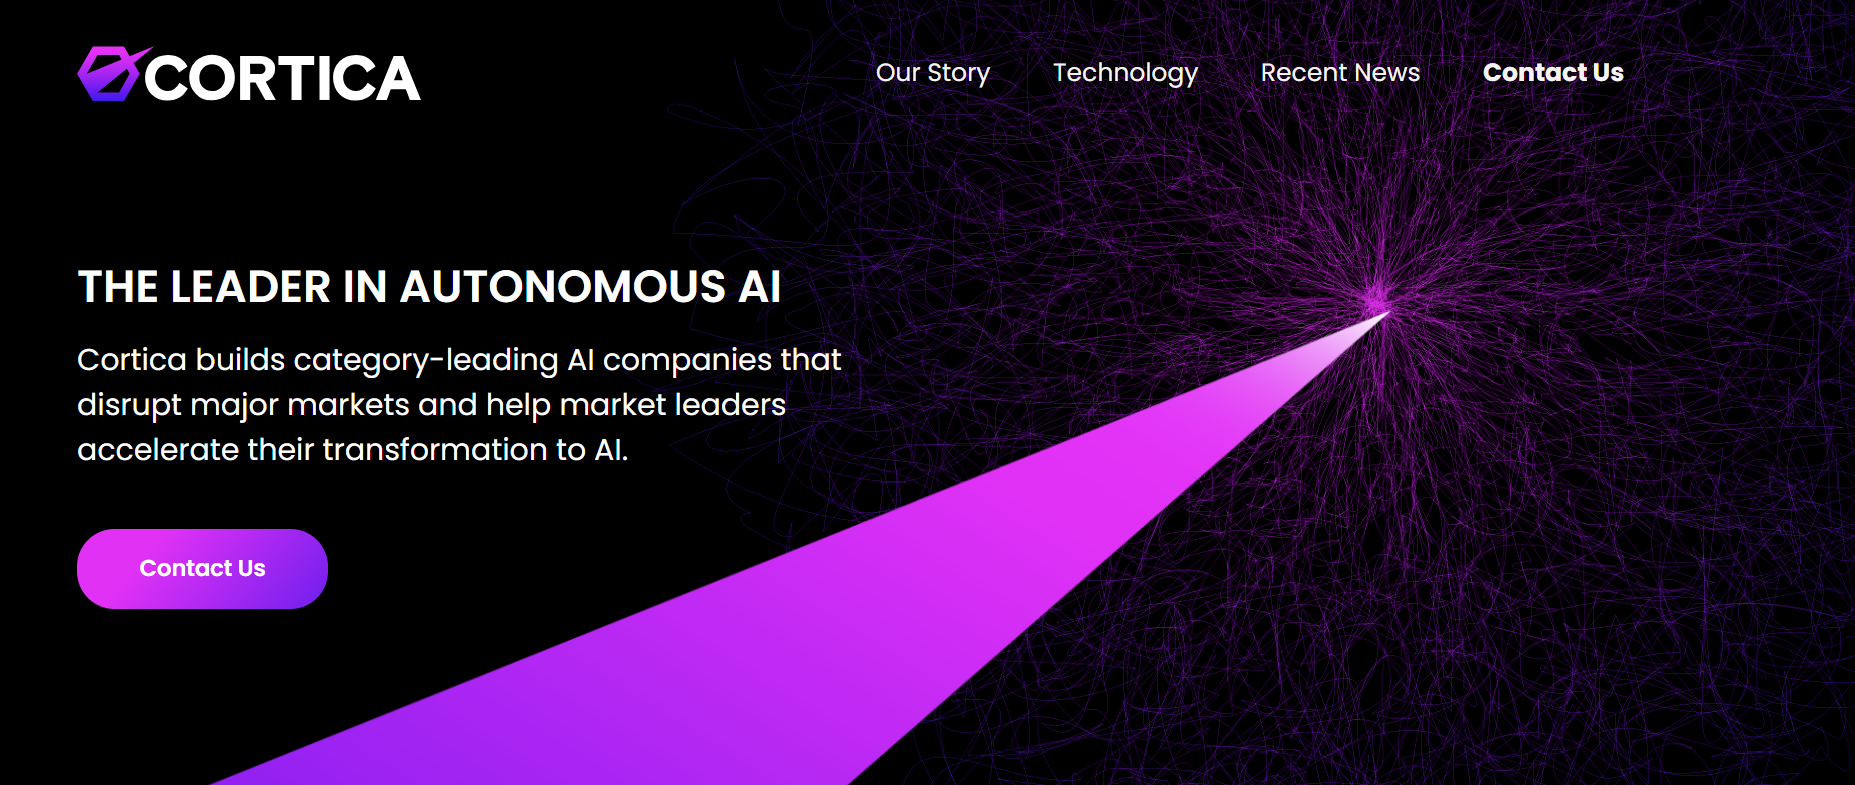 Cortica is a leading tech company in the field of Autonomous AI. 